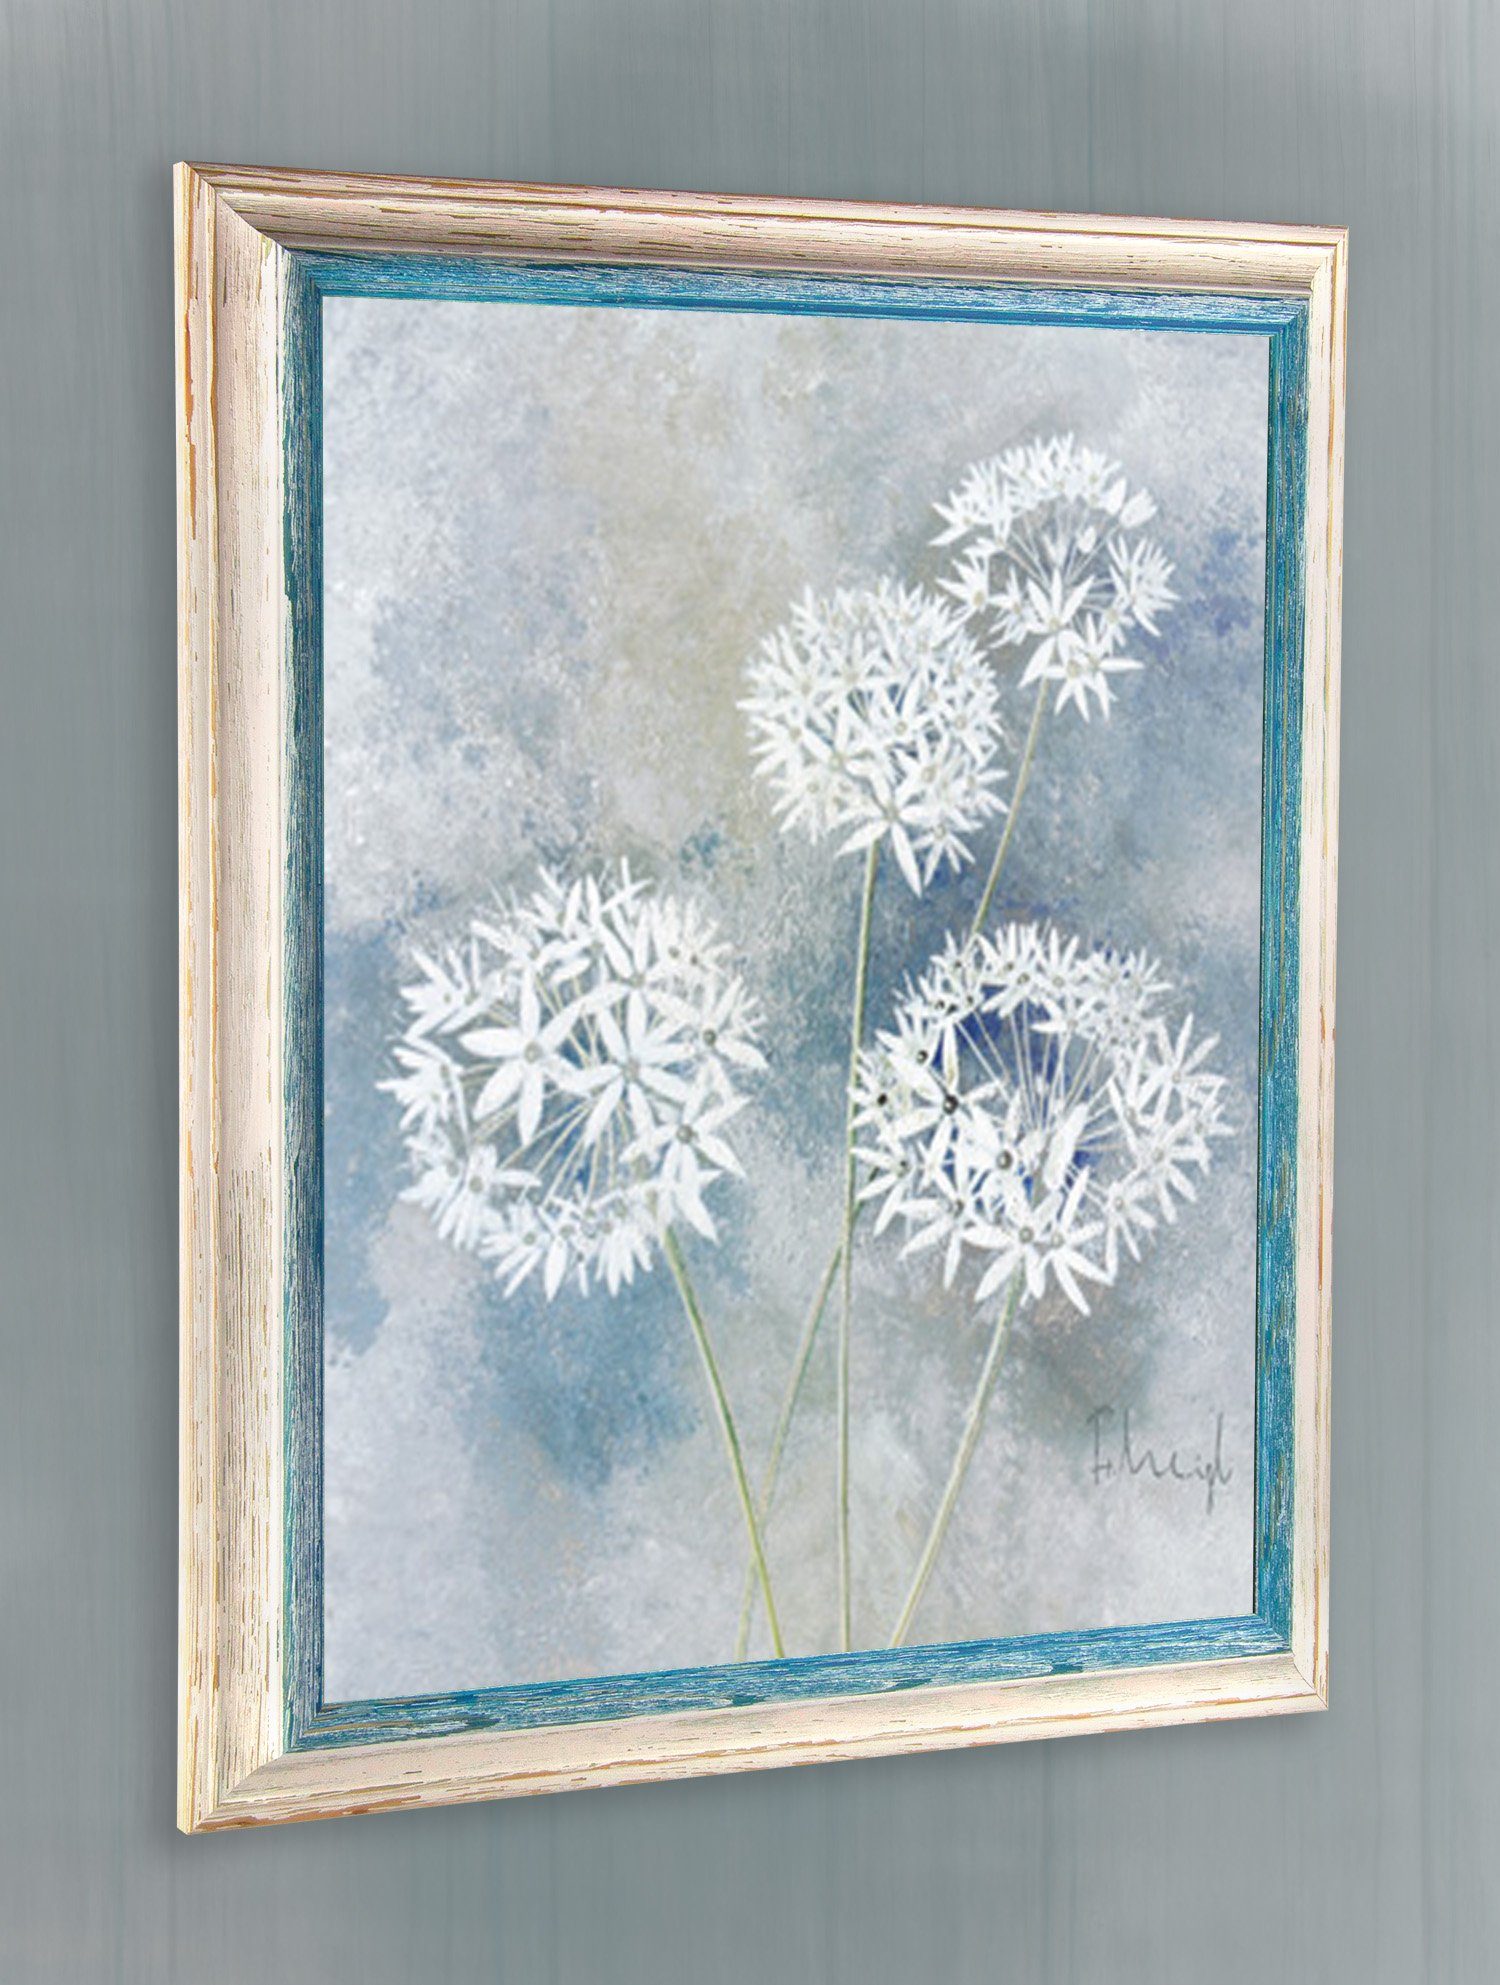 BIRAPA Einzelrahmen Bilderrahmen Amalfi, Vintage, cm, Stück), Blau (1 Holz Weiß 25x25